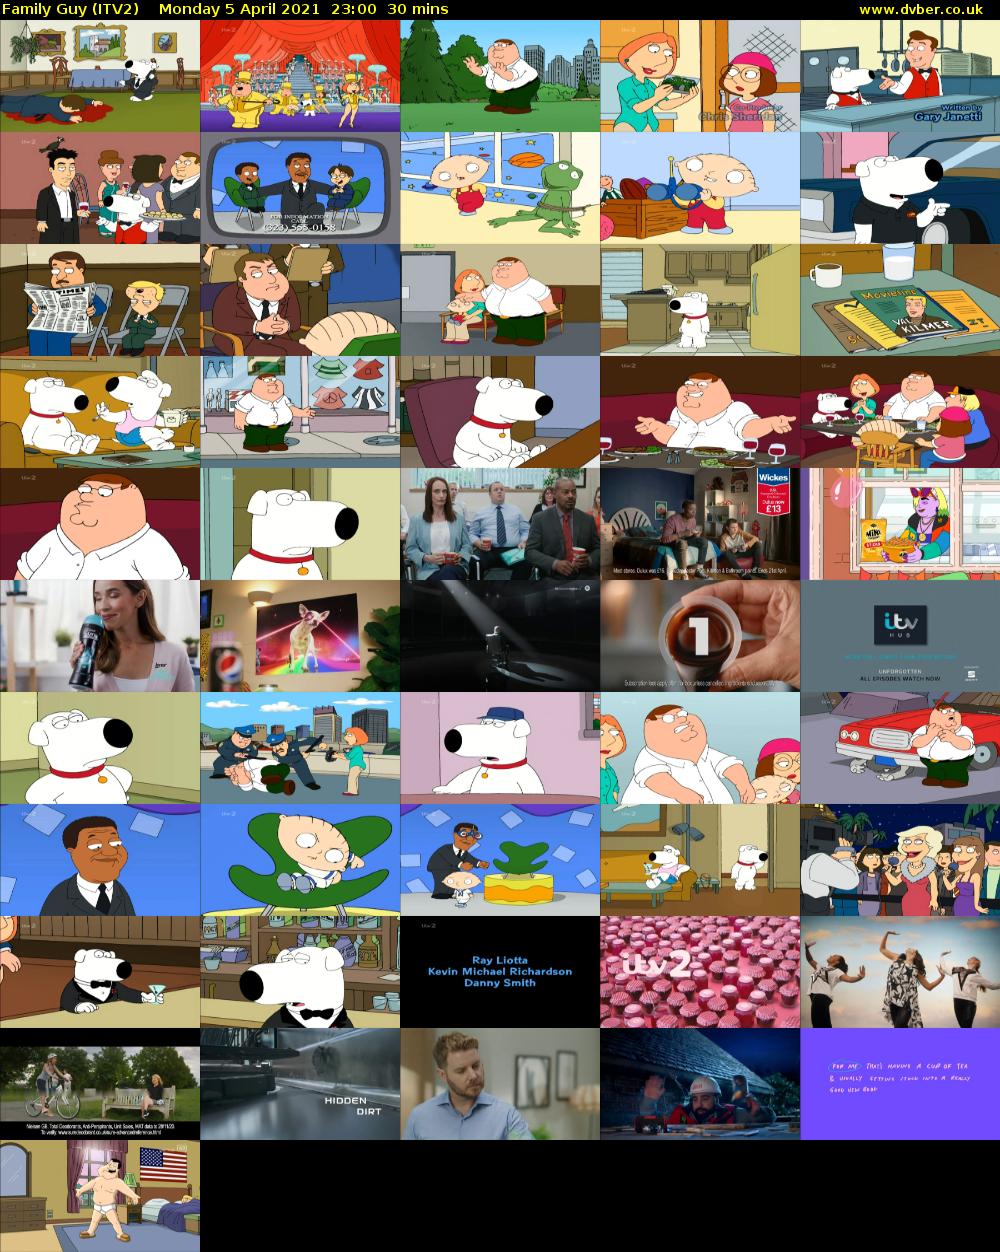 Family Guy (ITV2) Monday 5 April 2021 23:00 - 23:30